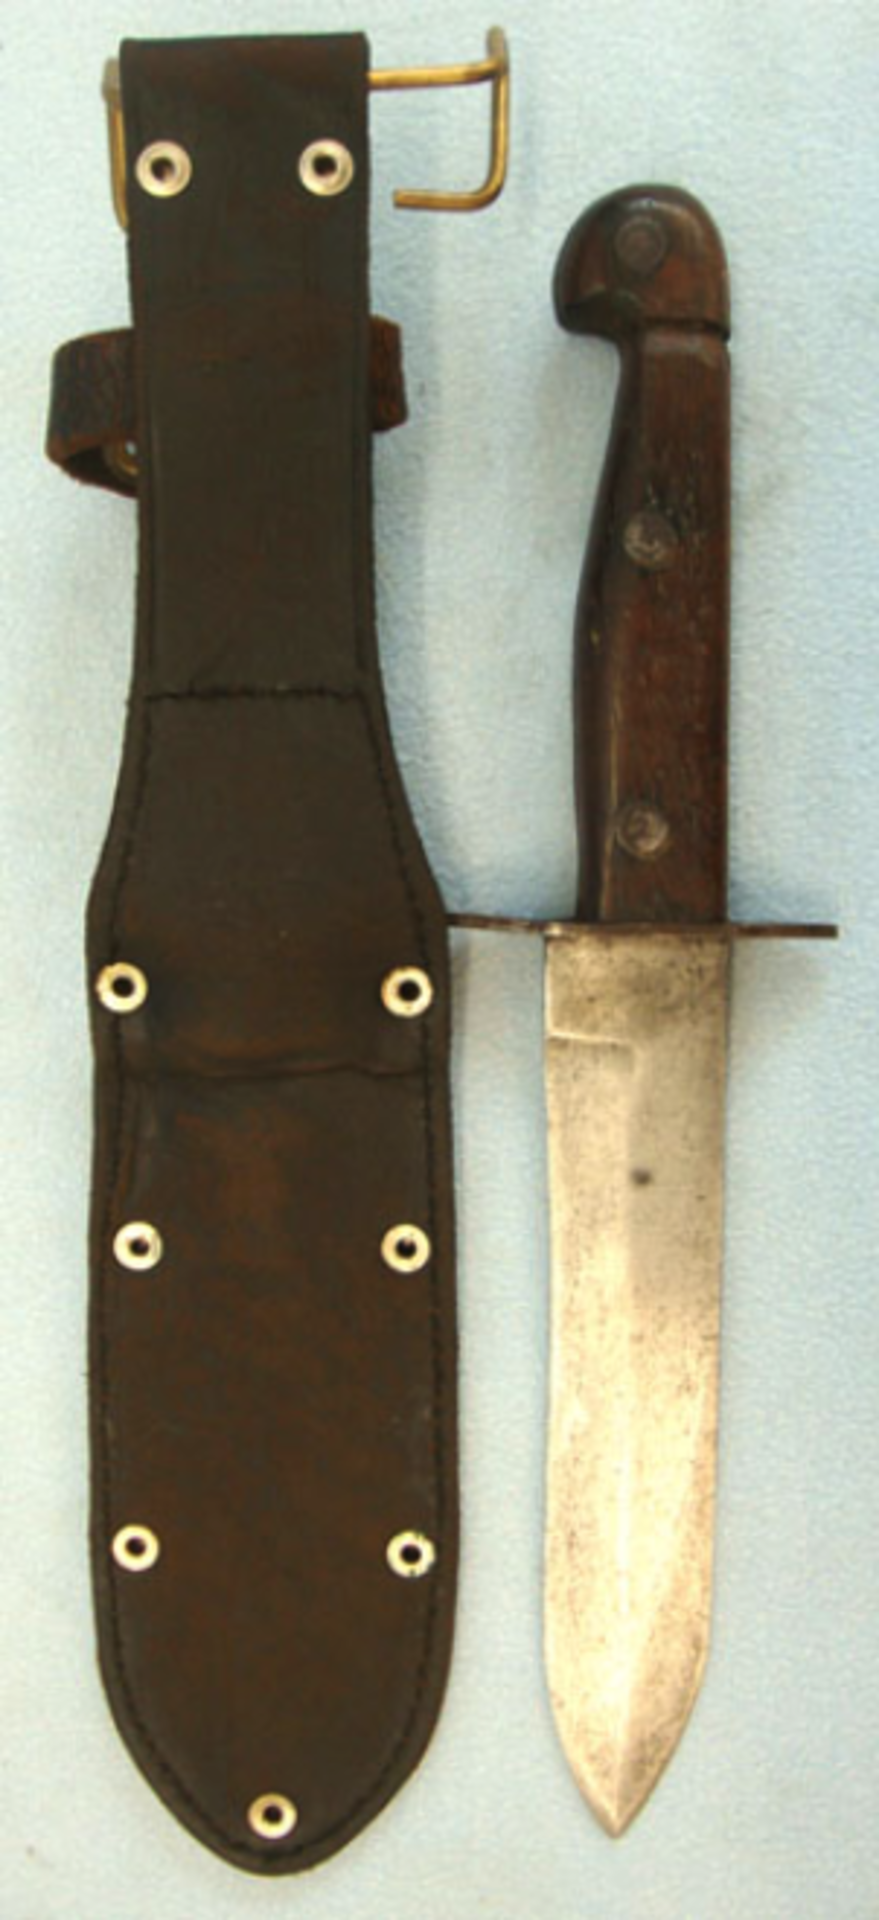 WW2 Australian Wood Gripped Fighting Knife & Leather Sheath By East Bros. Sydney. - Image 3 of 3